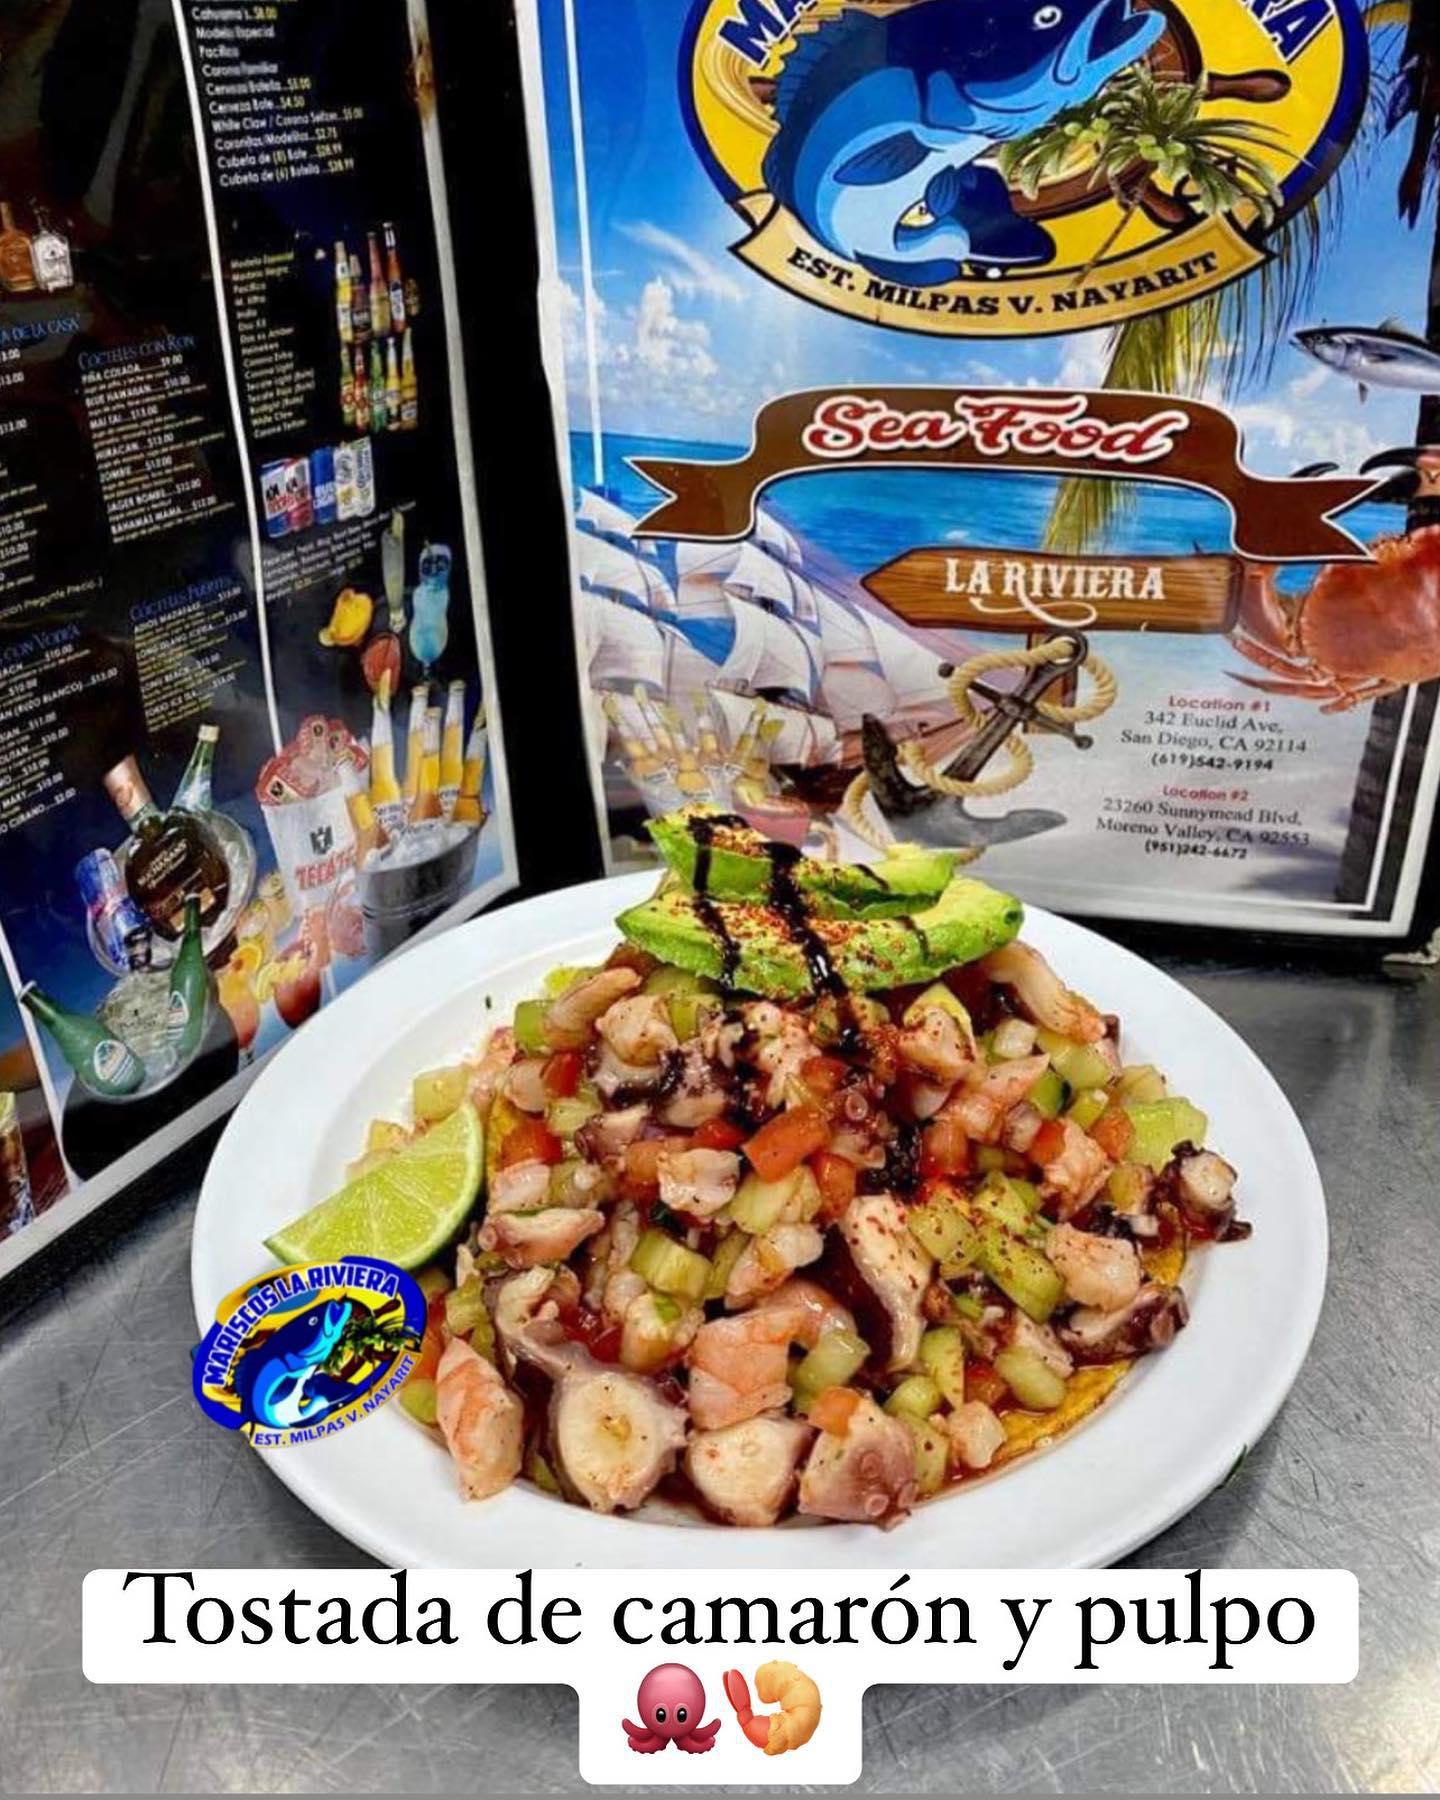 Mariscos La Riviera Estilo Milpas Viejas Nayarit CastanÌeda's Mexican Food- tostada de camaron y pulpo